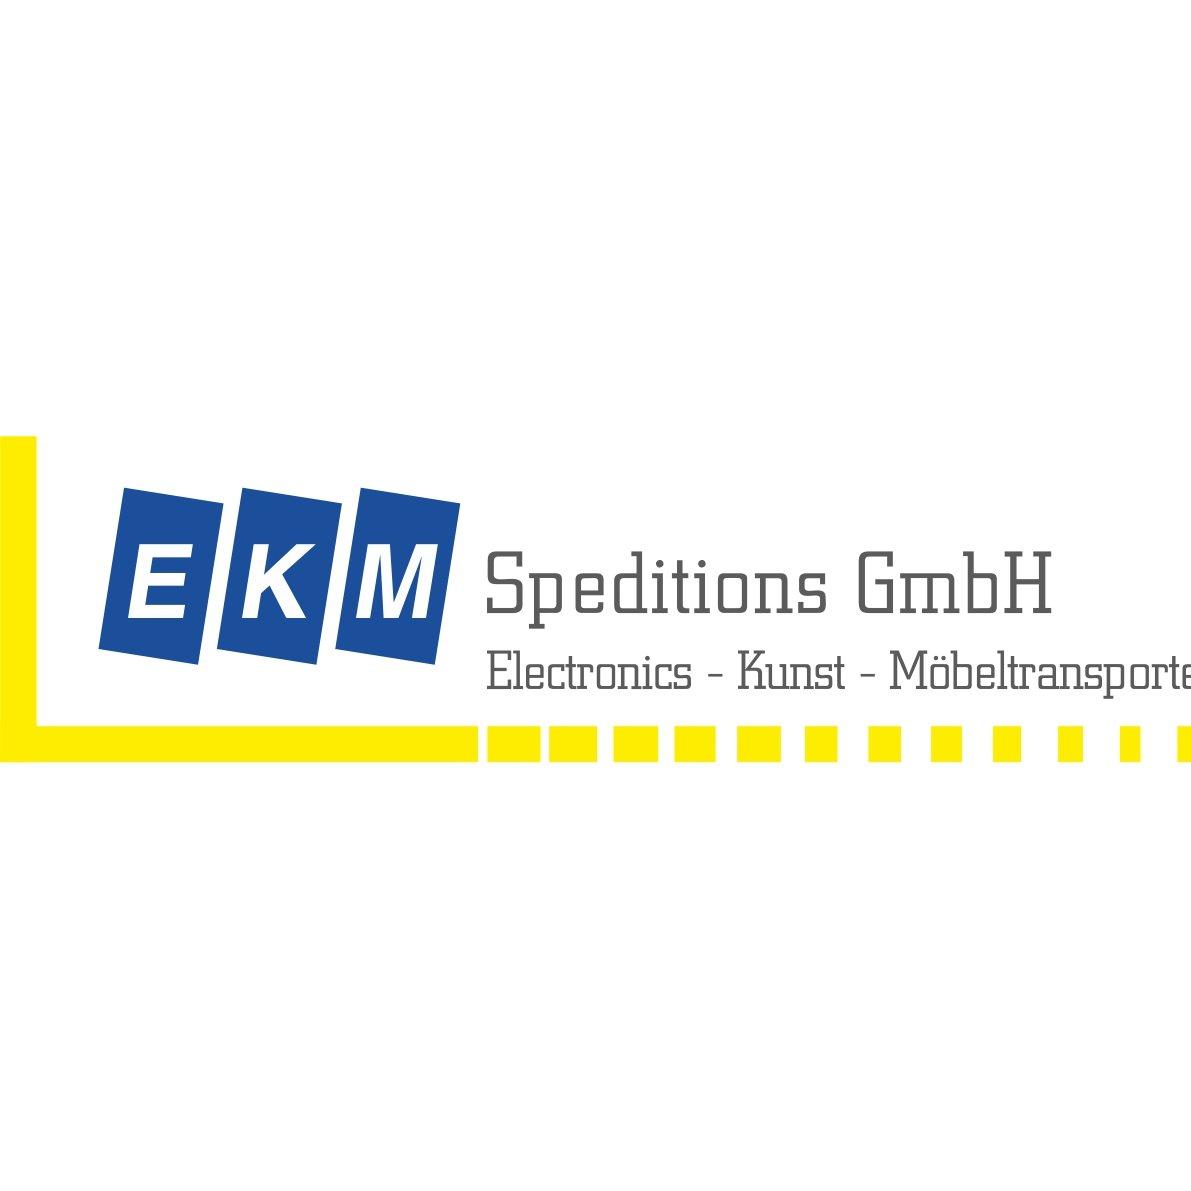 EKM Speditions GmbH Electronics Kunst Möbeltransporte - LOGO